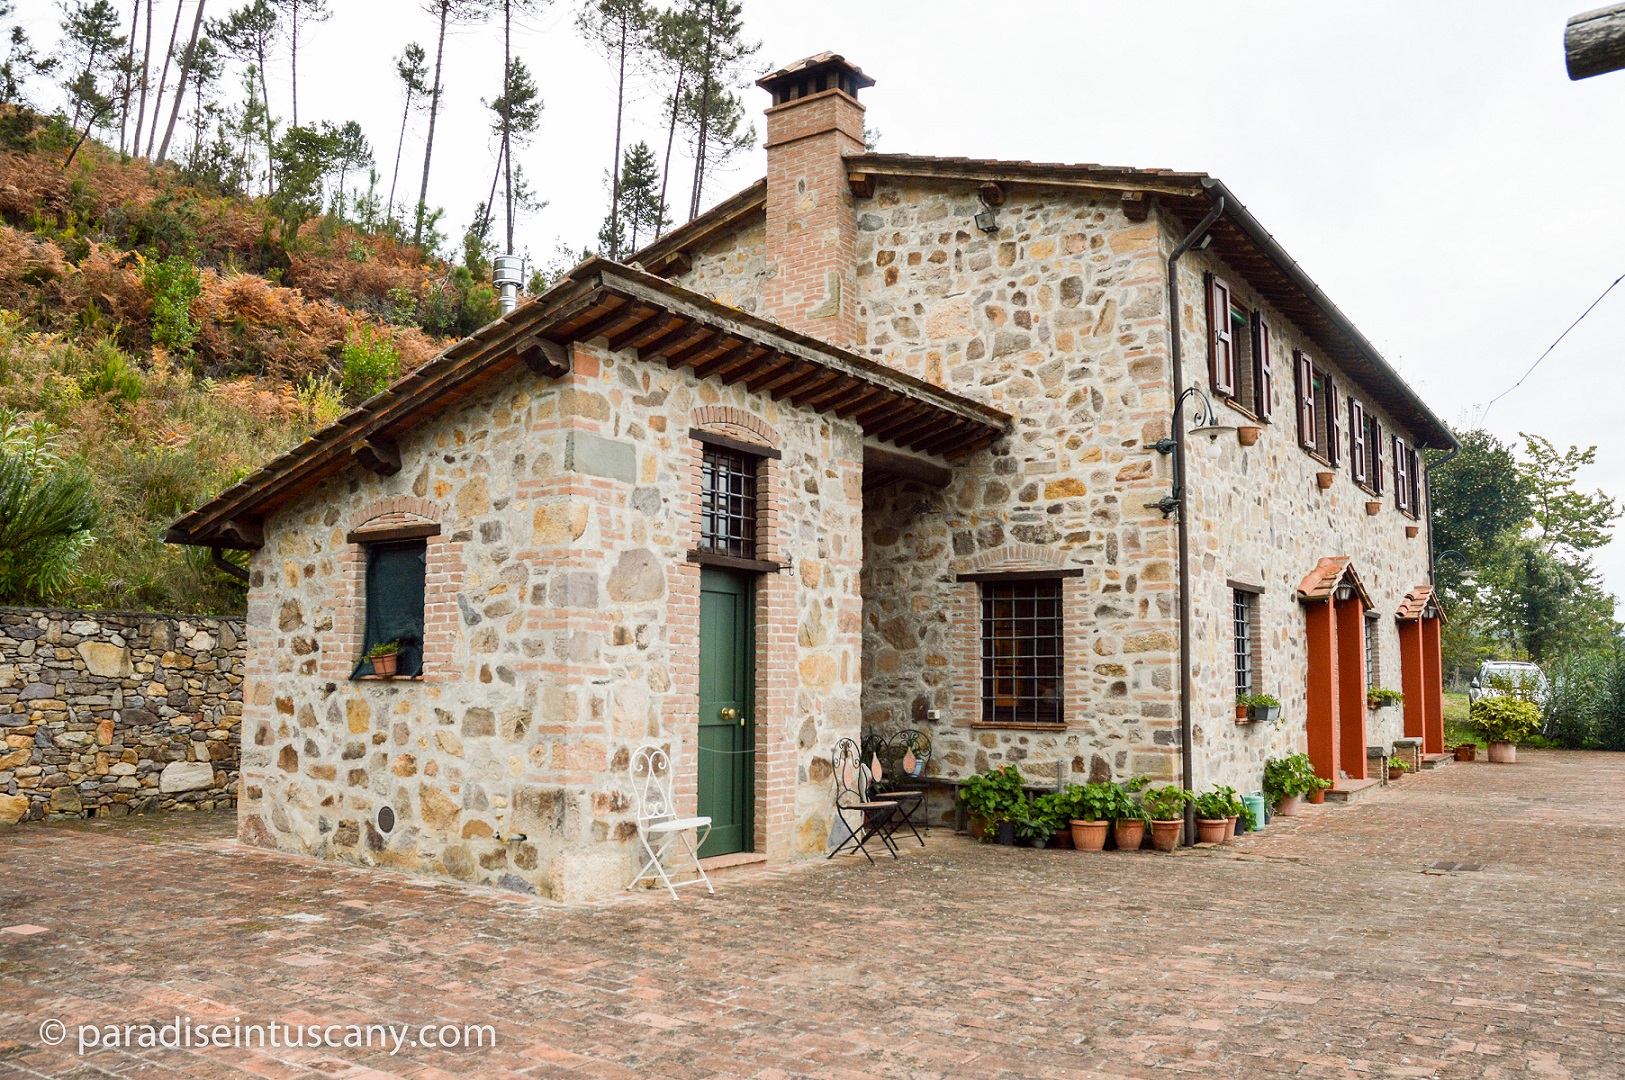 Villa Ruota - Relax in this Tuscan farmhouse with beathtaking vistas